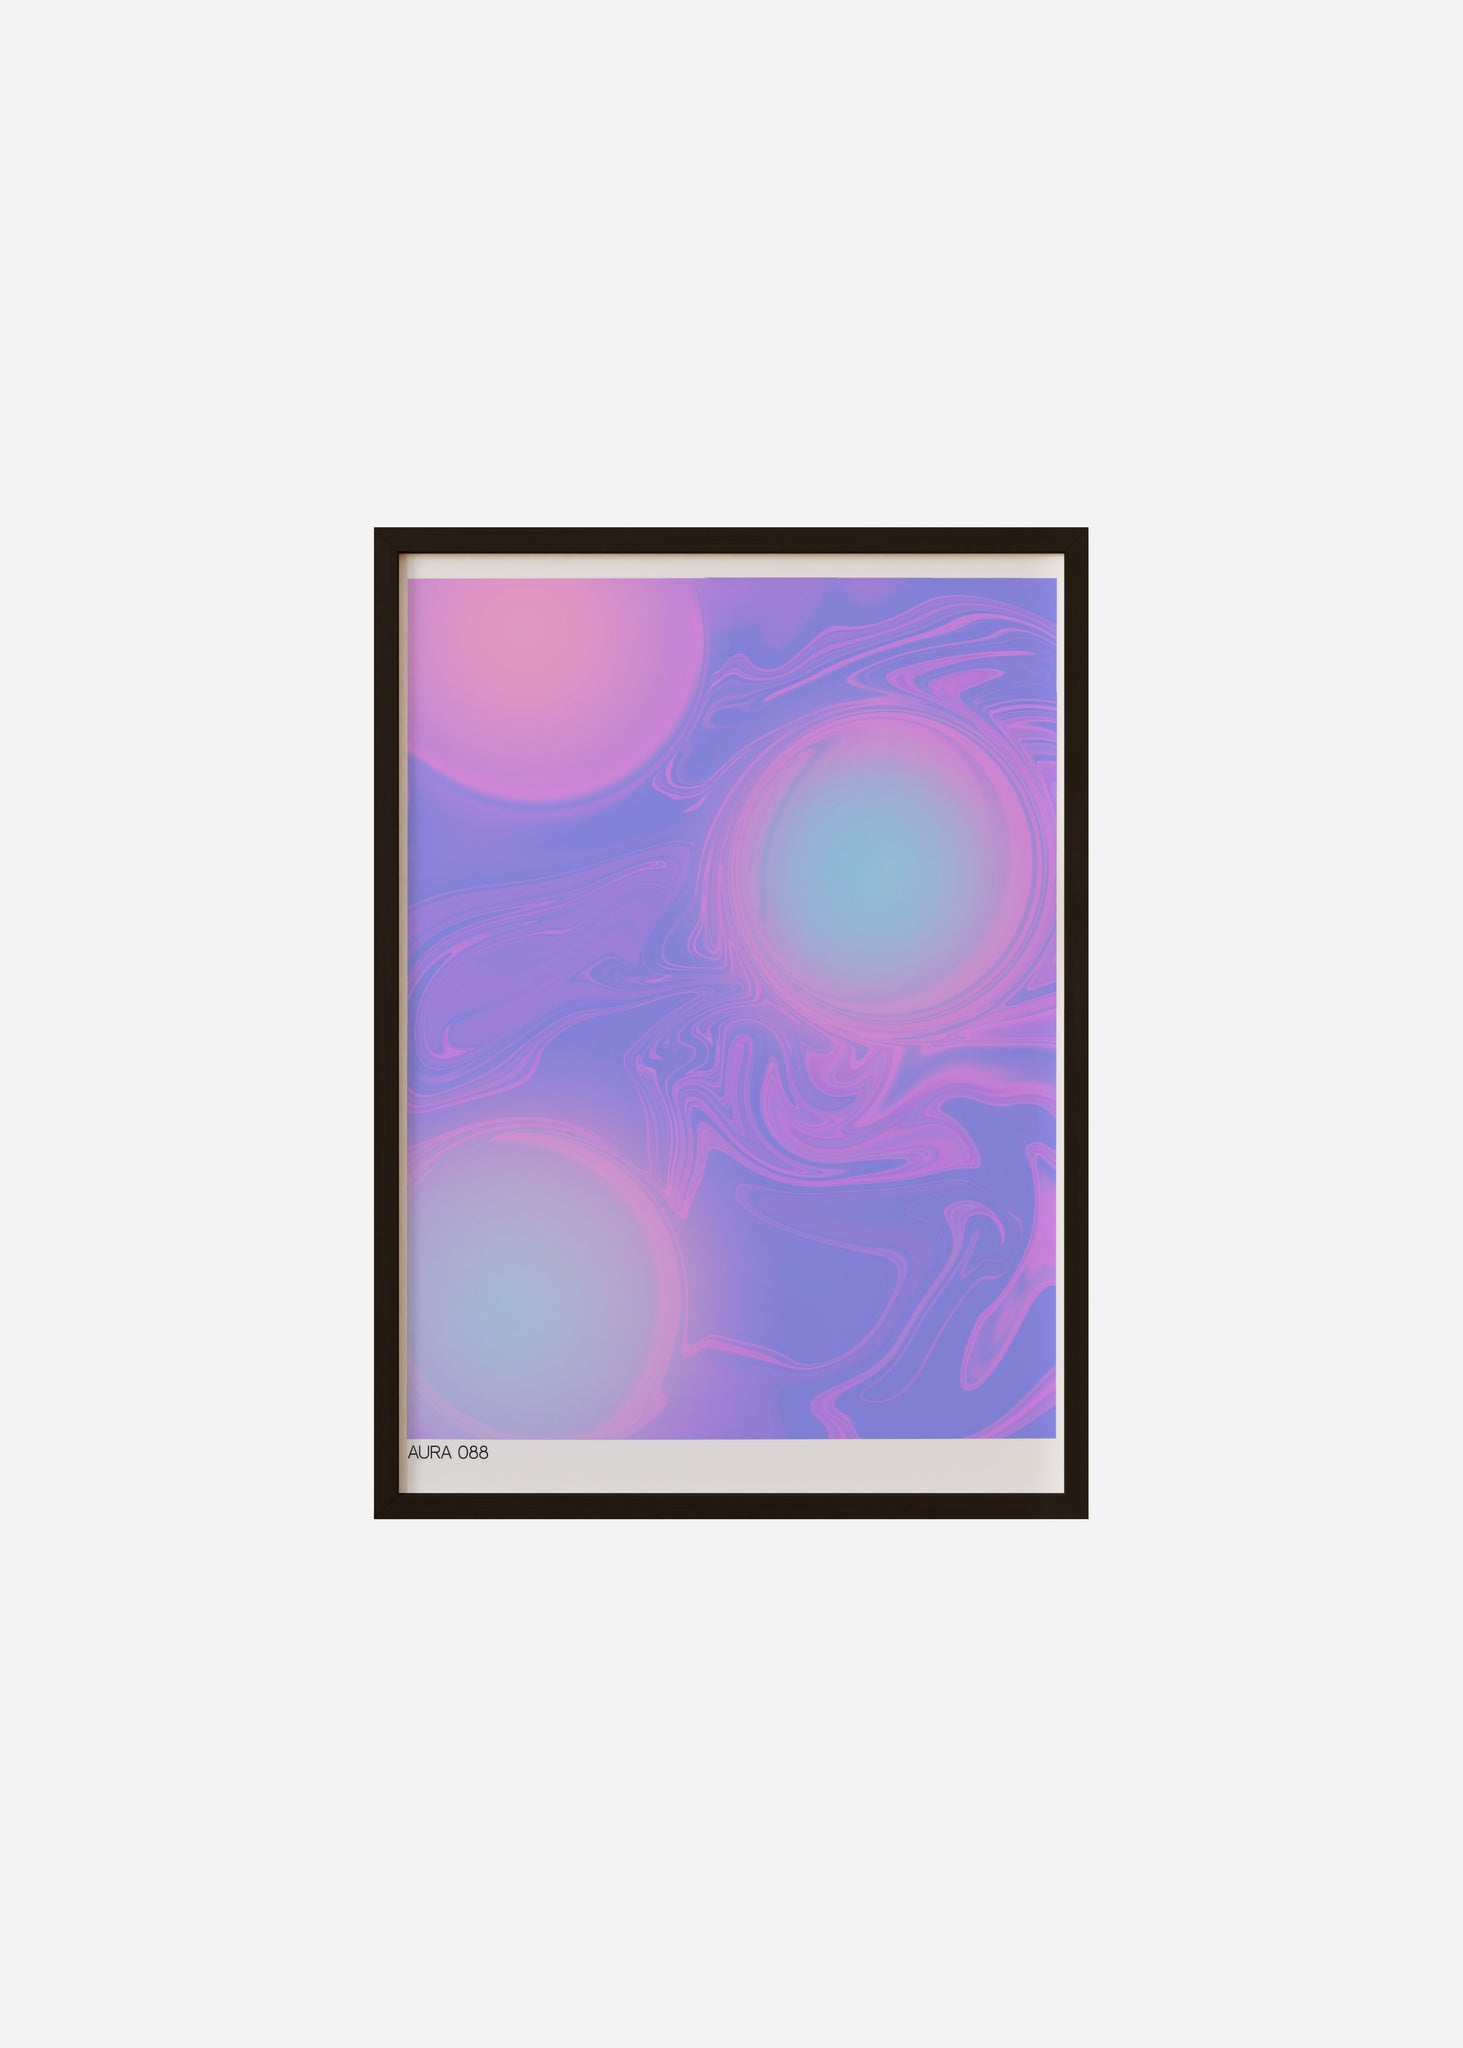 aura 088 Framed Print